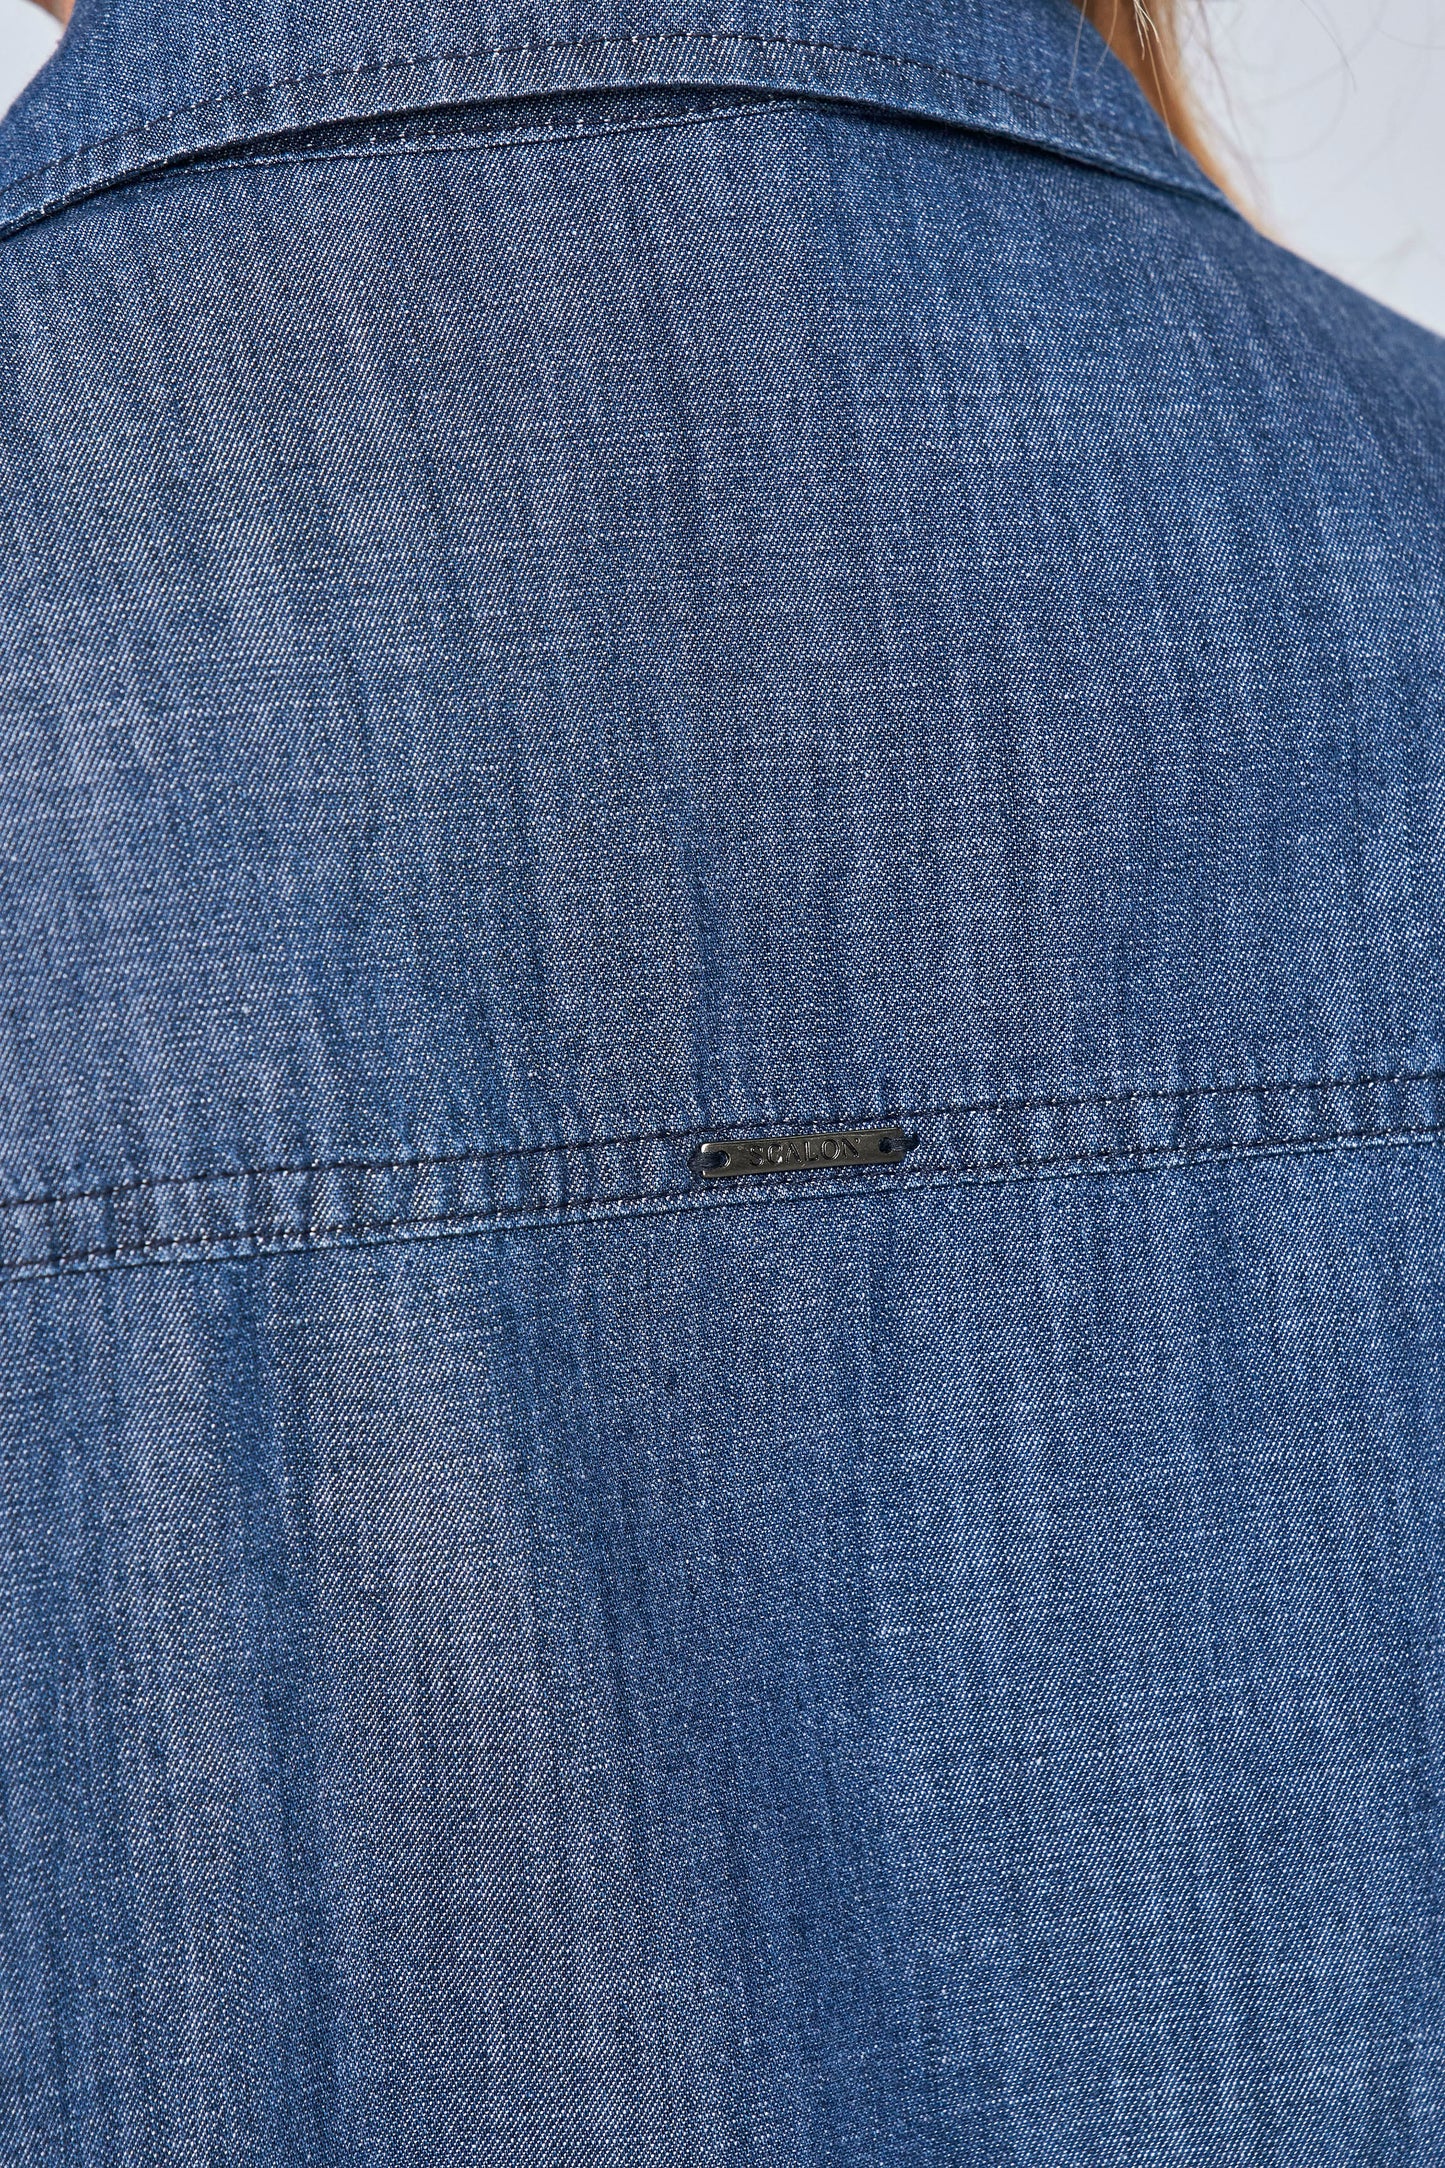 camisa jeans manga longa com recortes